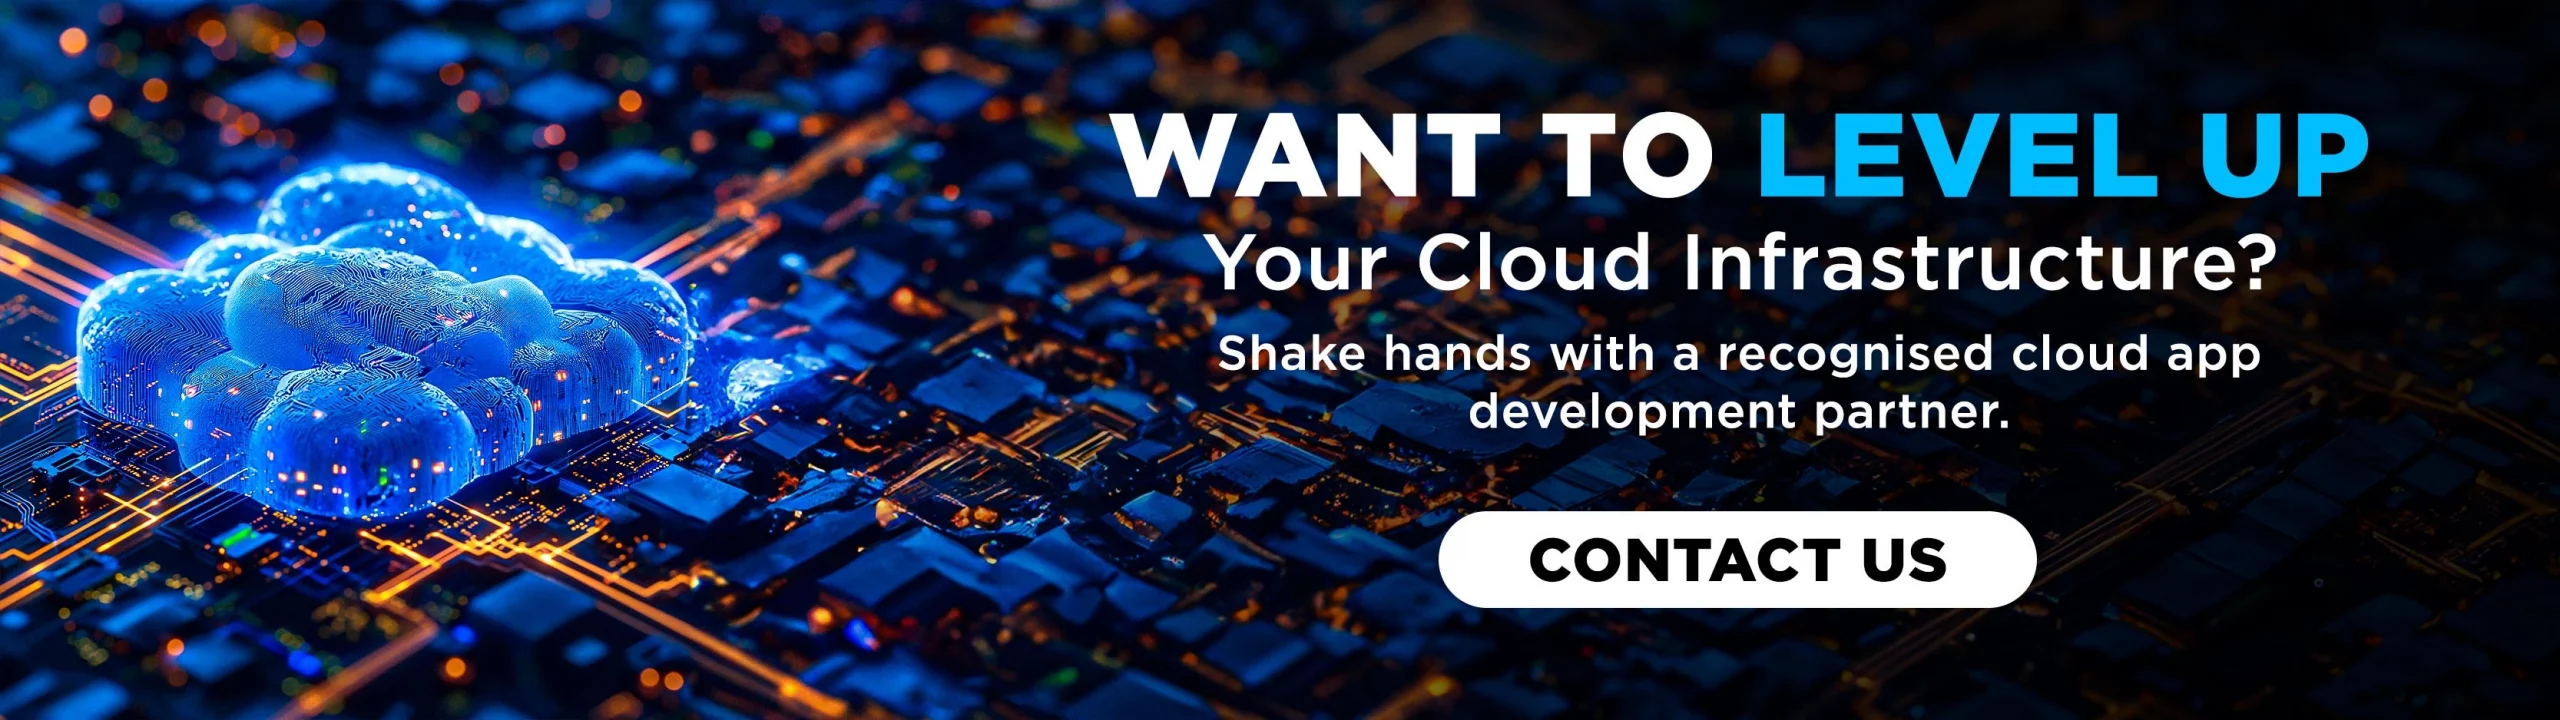 cloud app development partner